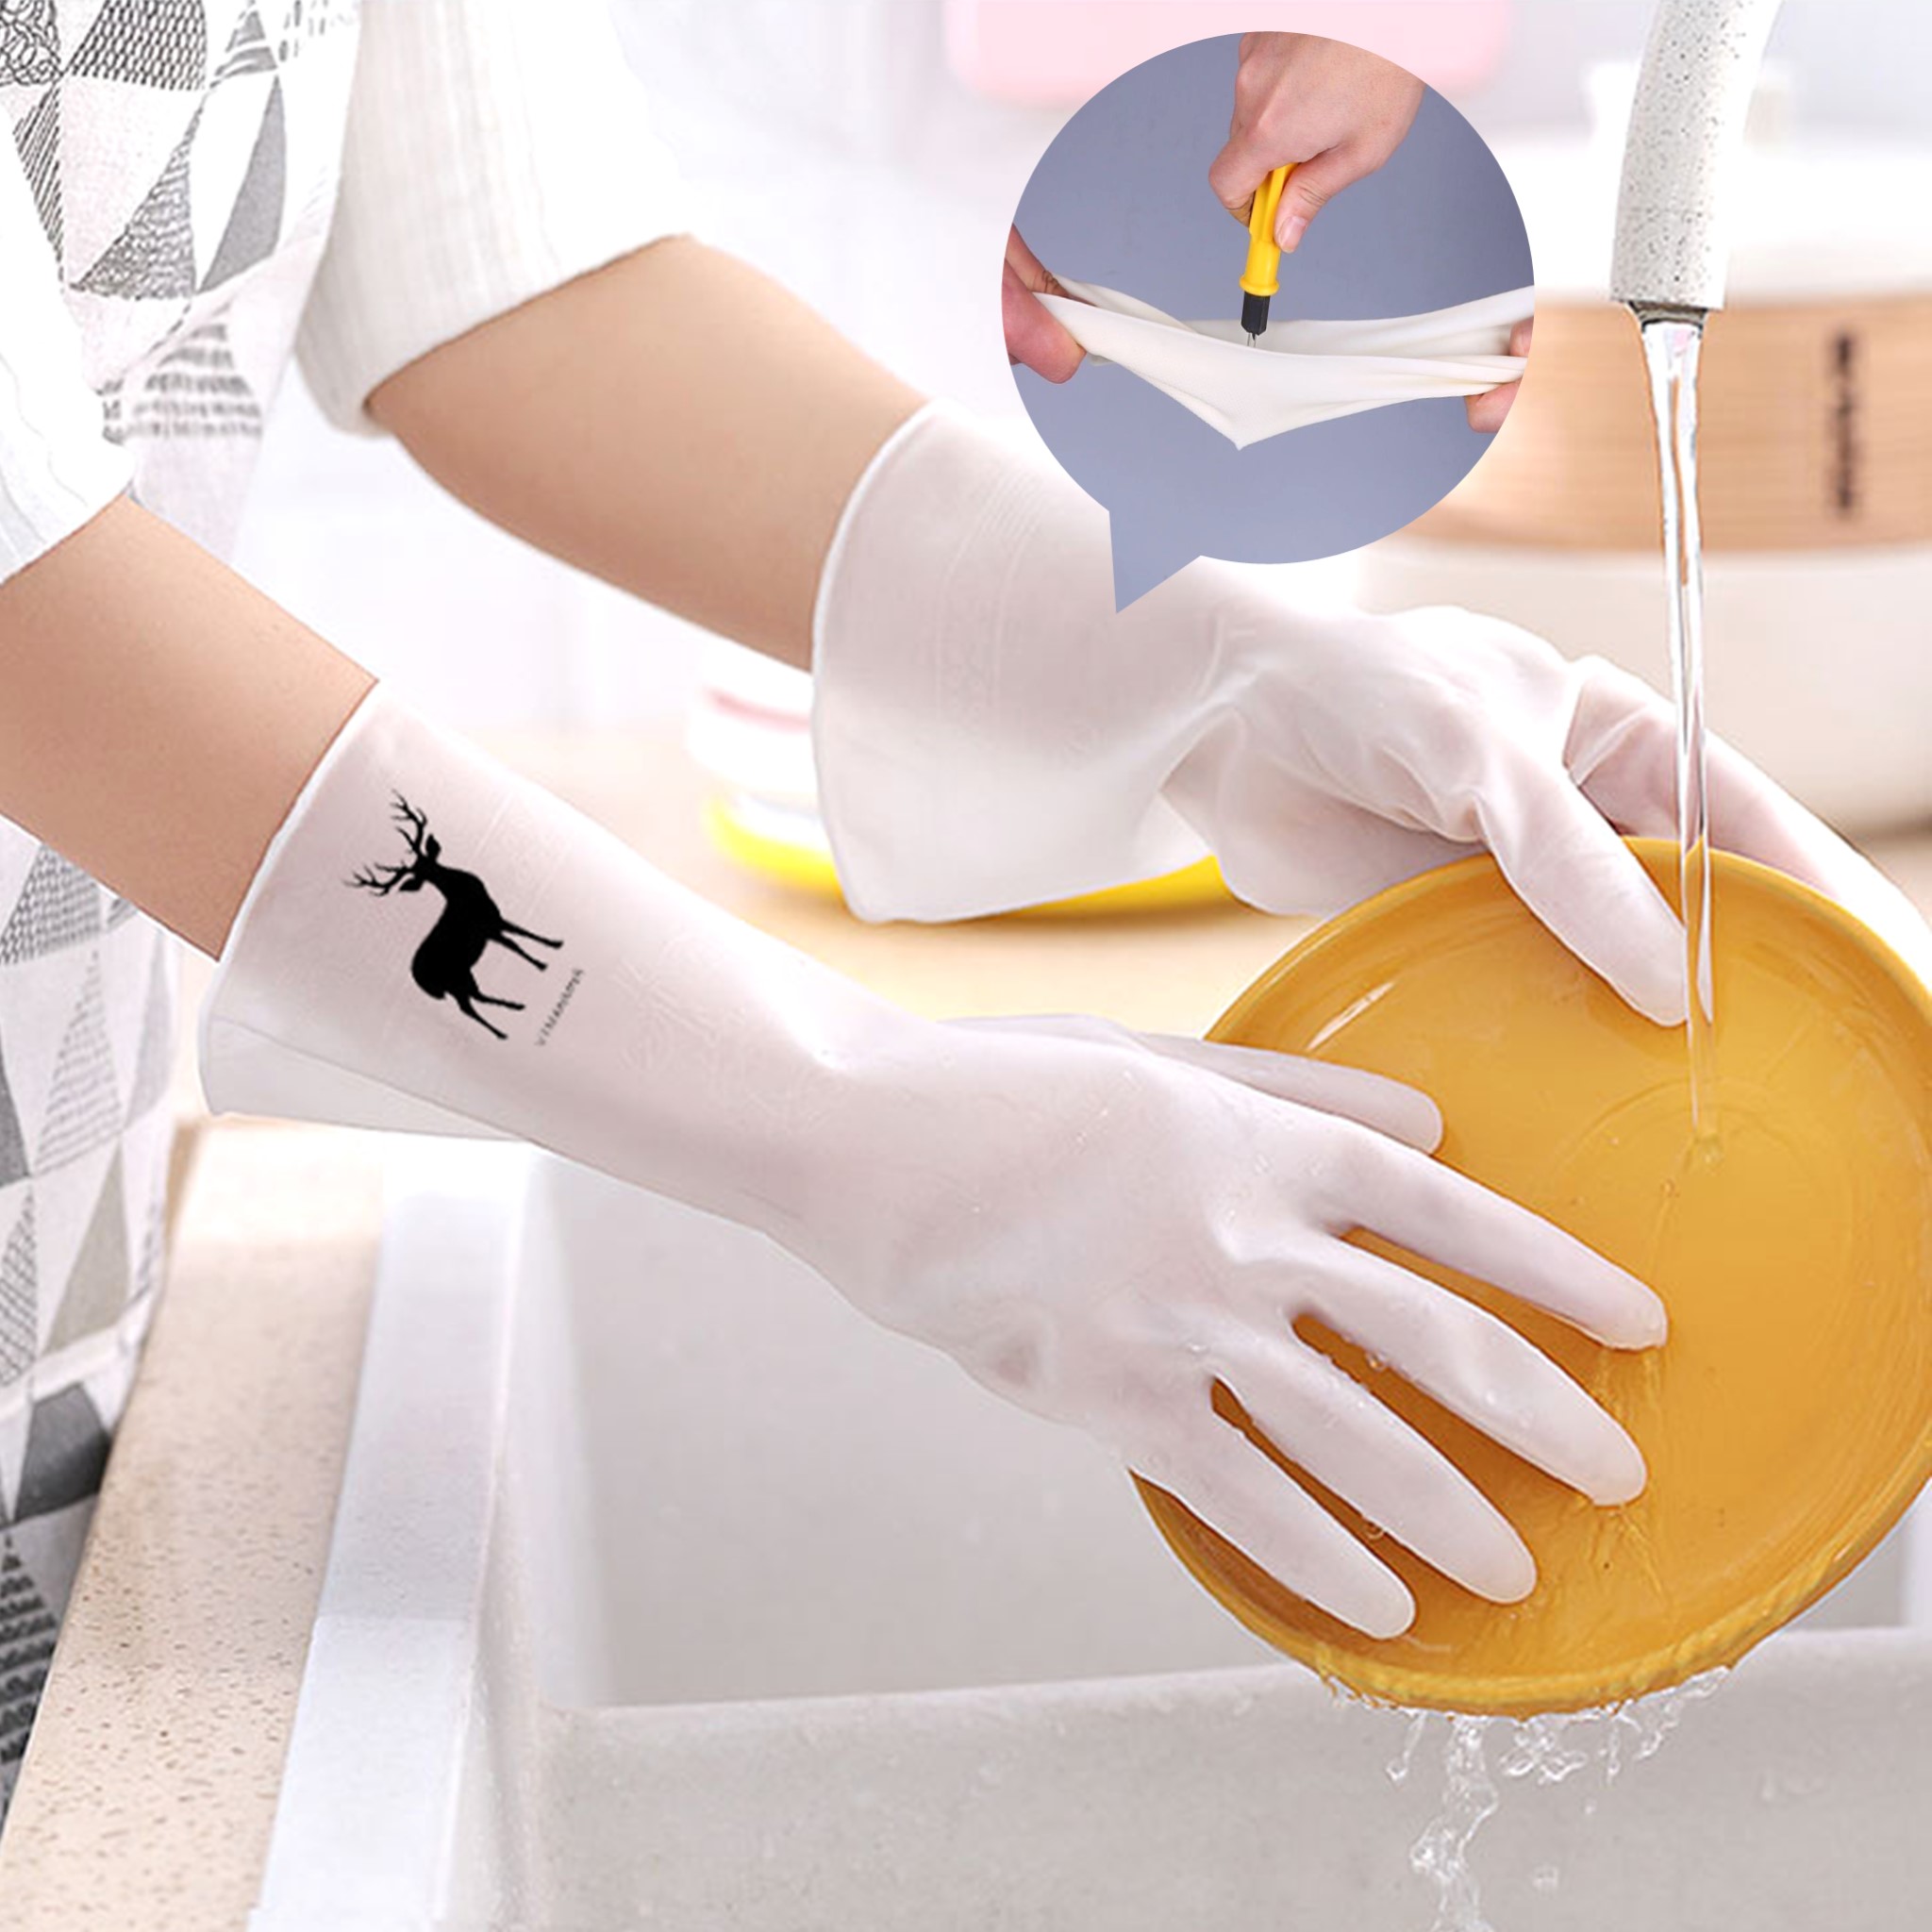 HH-ถุงมือทำความสะอาด ยางไนไตรล์ ถุงมือสำหรับใช้ในงานครัว ทำอาหาร ล้างจาน ห้องครัว ห้องน้ำ รถ